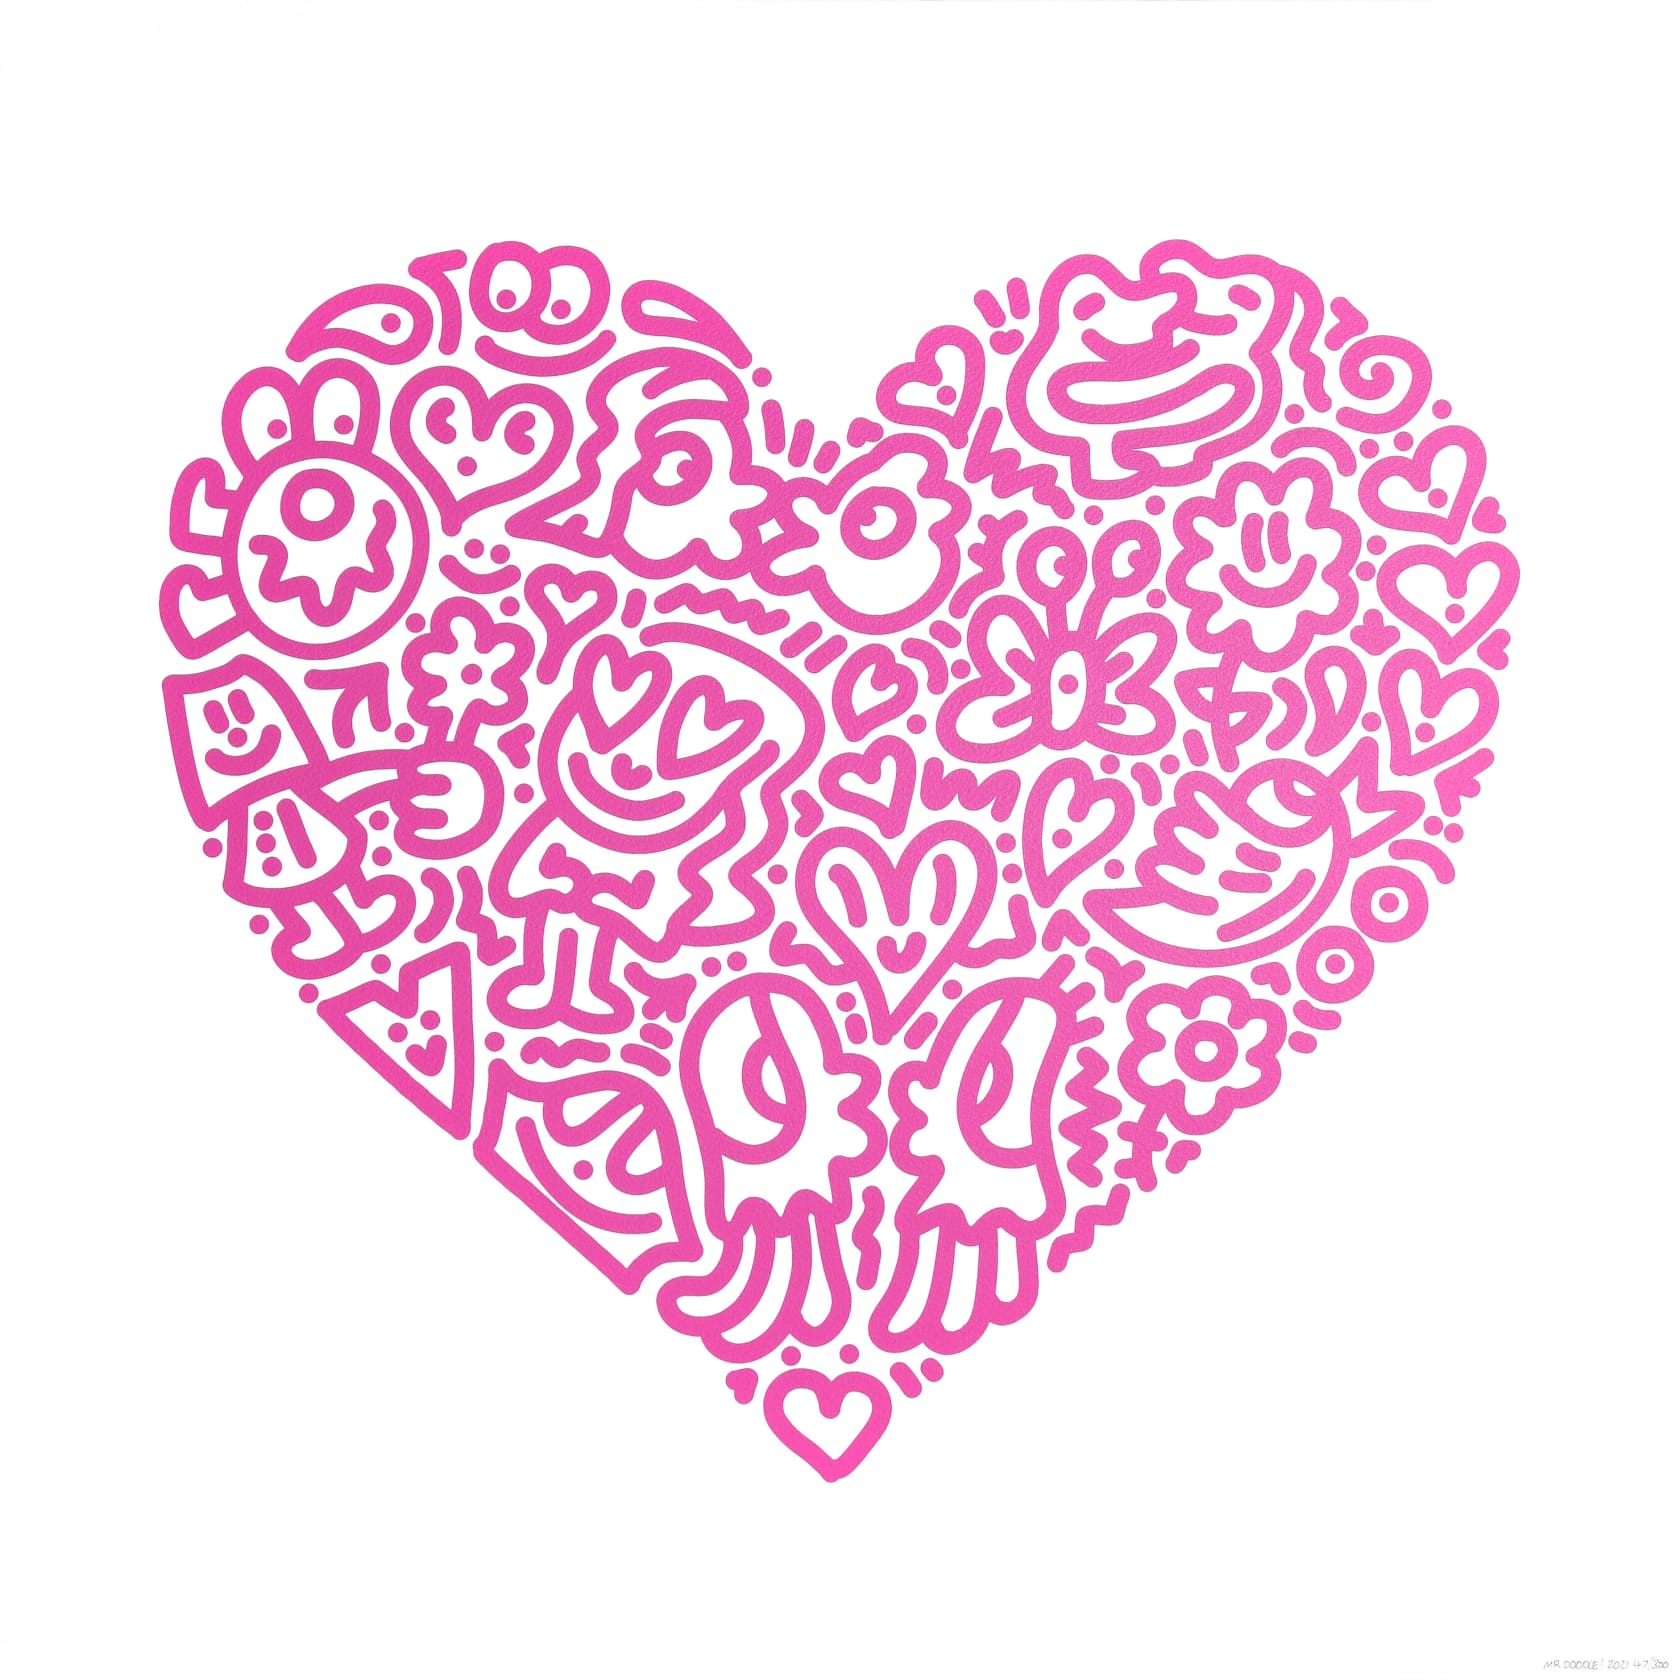 Mr. Doodle, Pop Heart (Pink), 2021